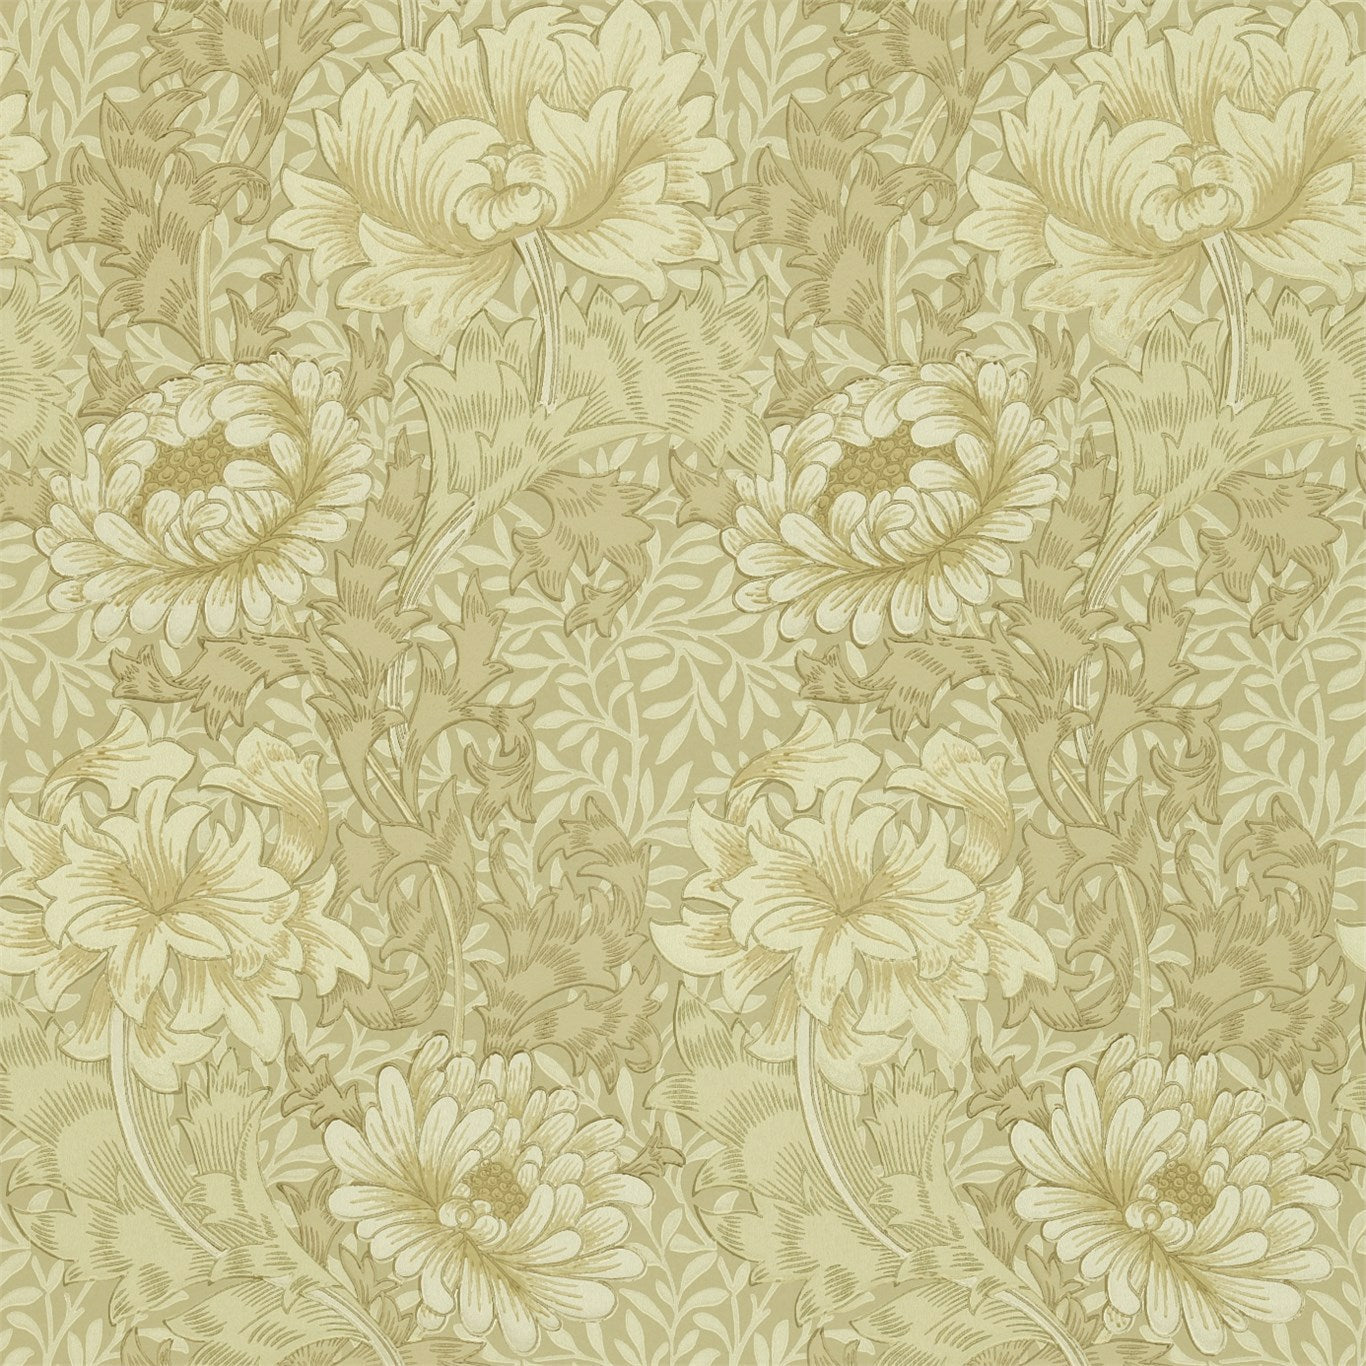 Chrysanthemum Wallpaper by Morris & Co